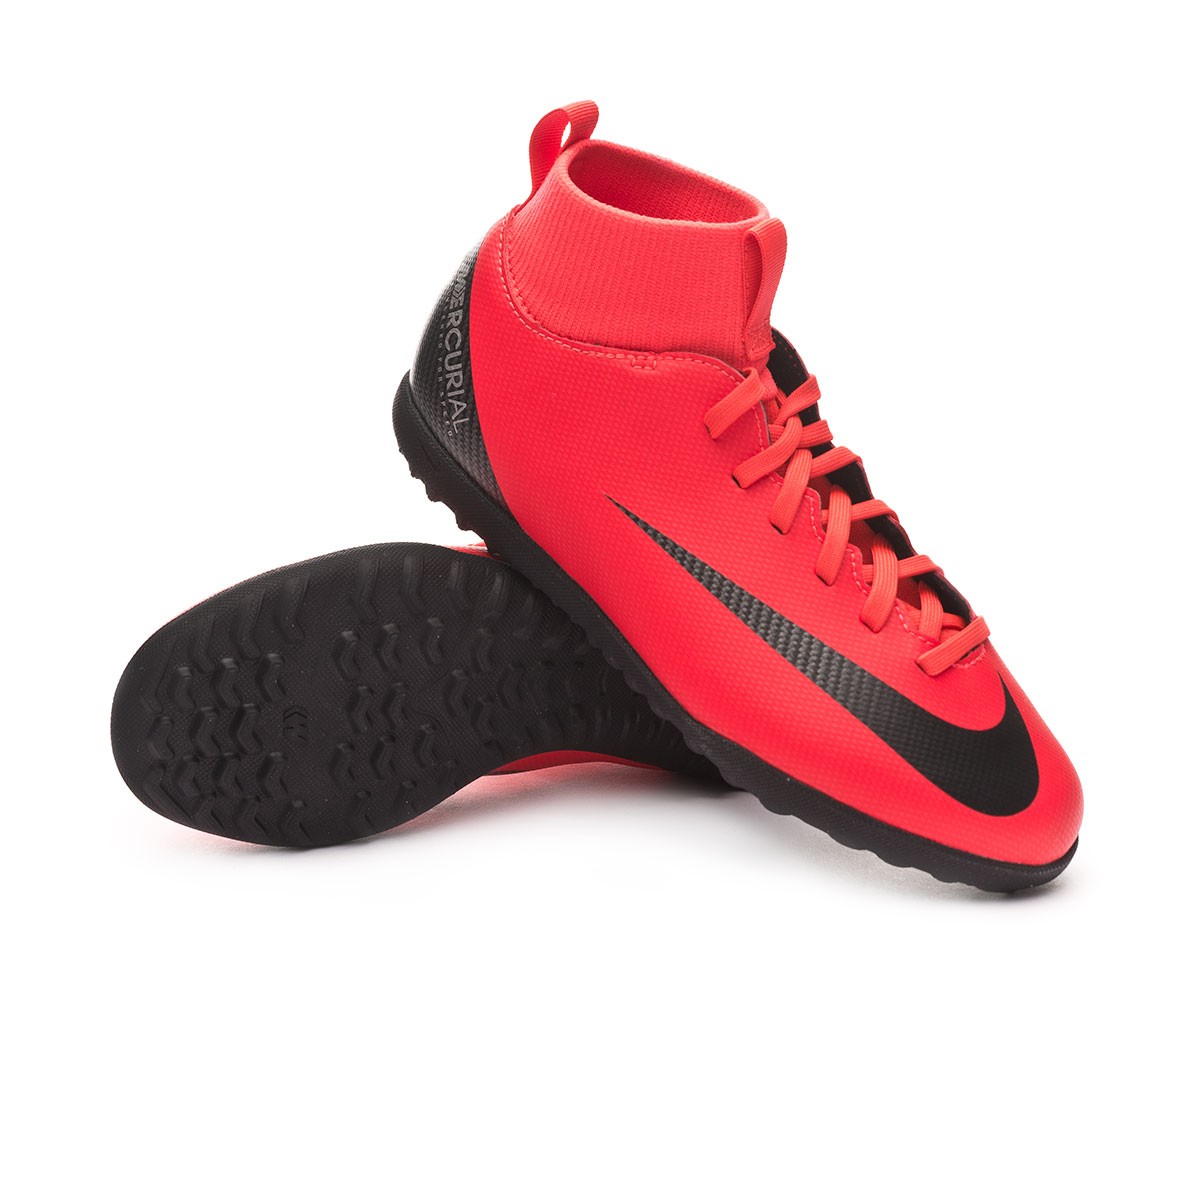 Tenis Nike Mercurial SuperflyX VI Club CR7 Turf Niño Bright  crimson-Black-Chrome - Tienda de fútbol Fútbol Emotion